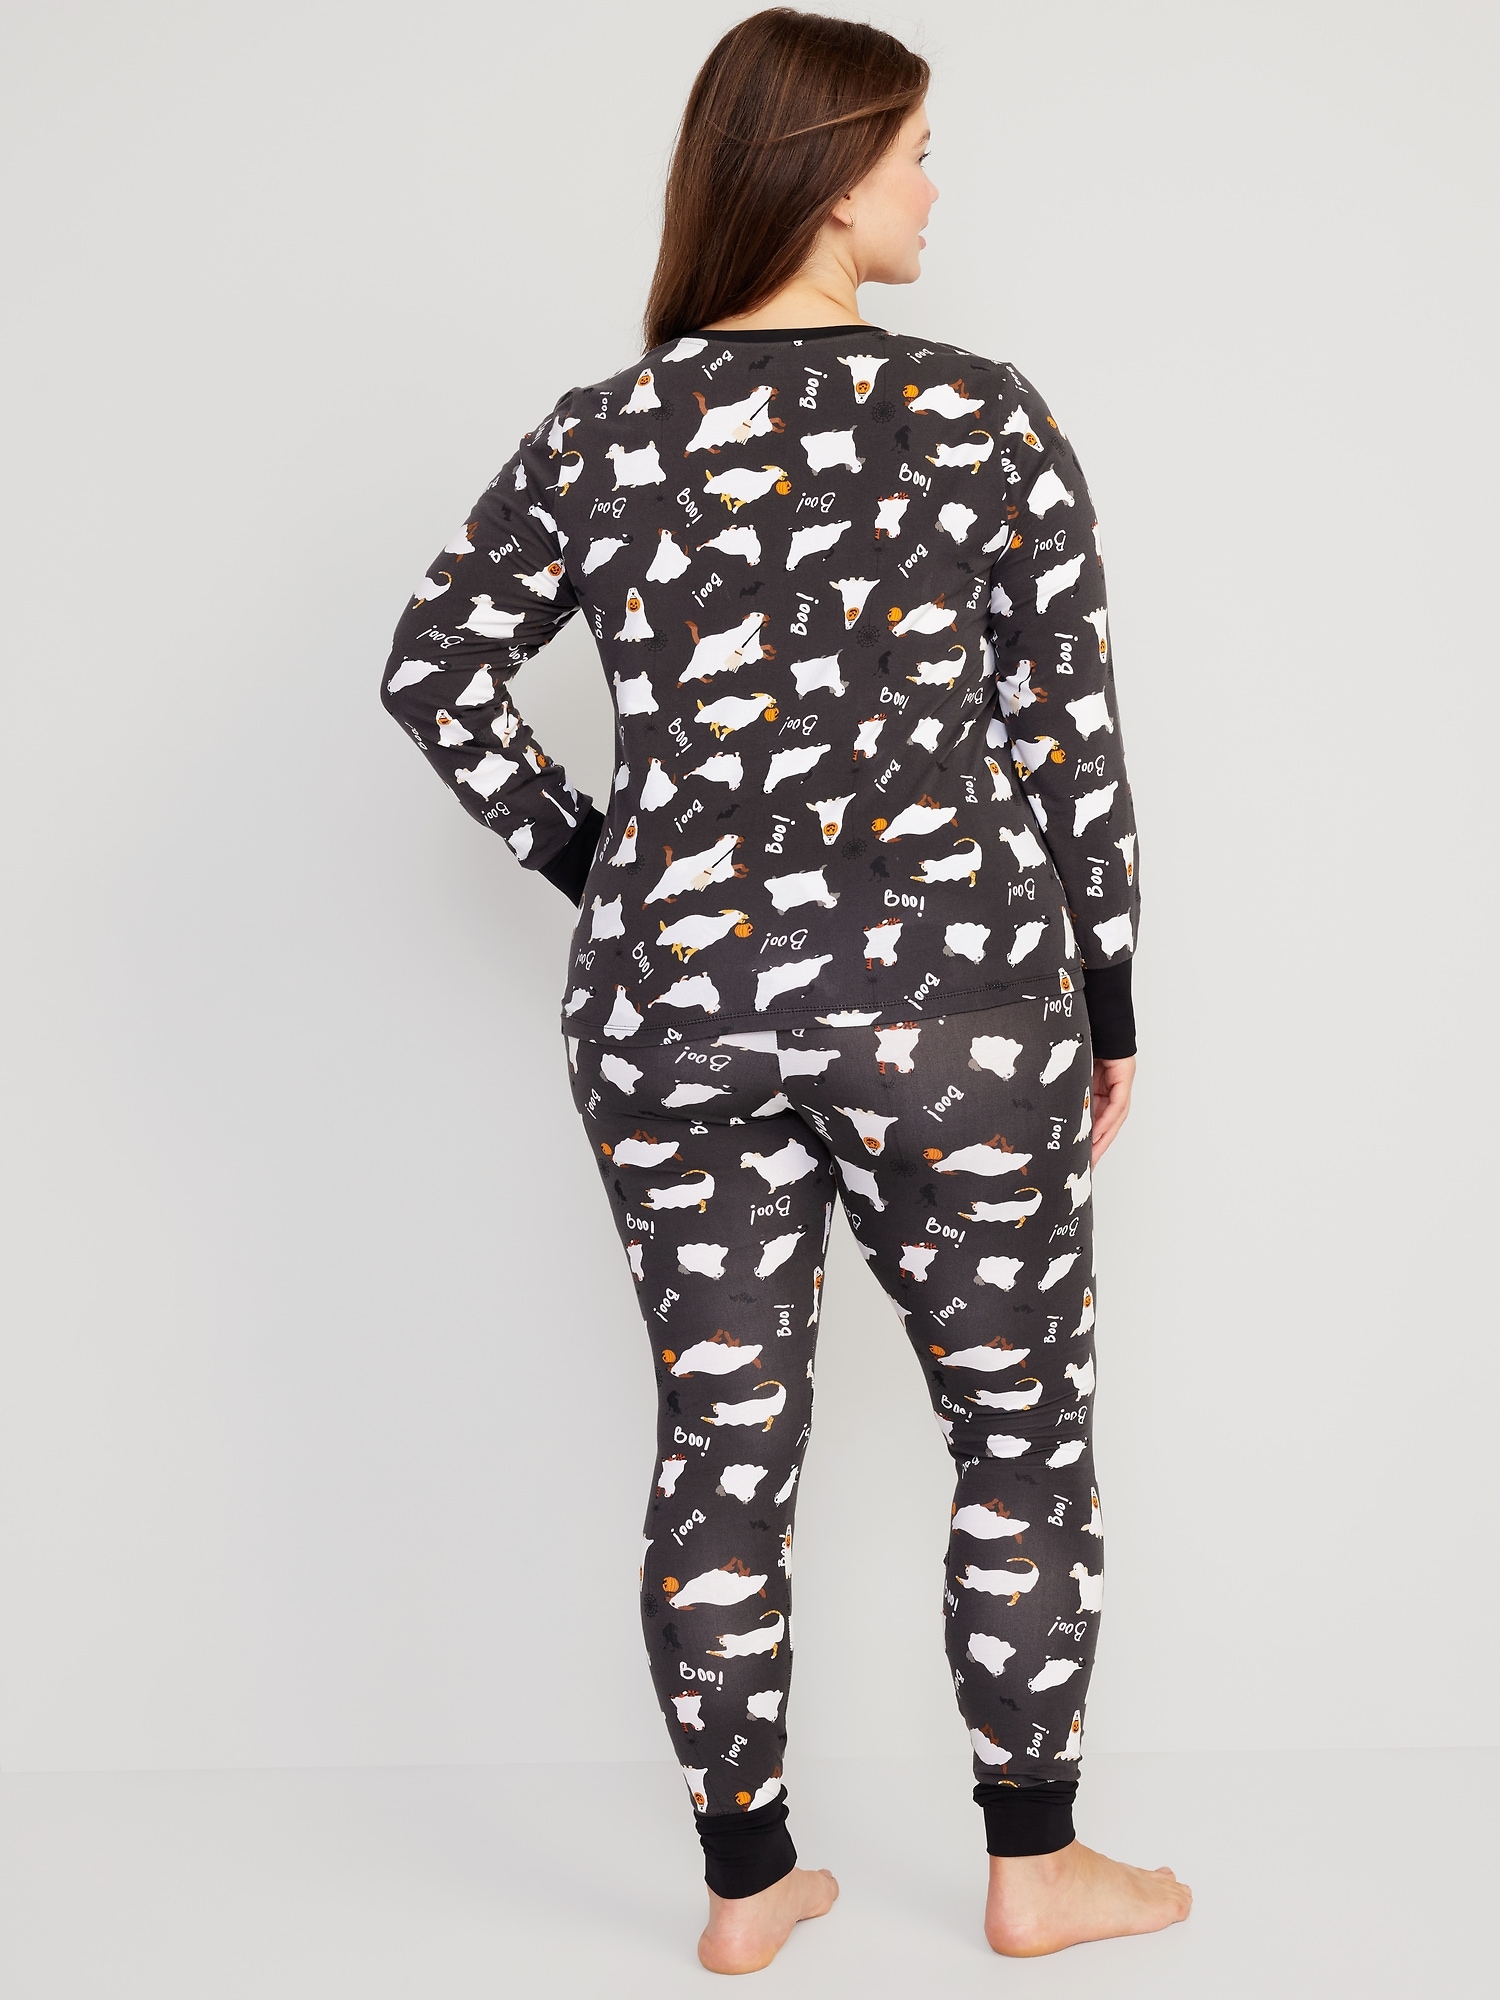 Matching Halloween Print Pajama Set for Women | Old Navy